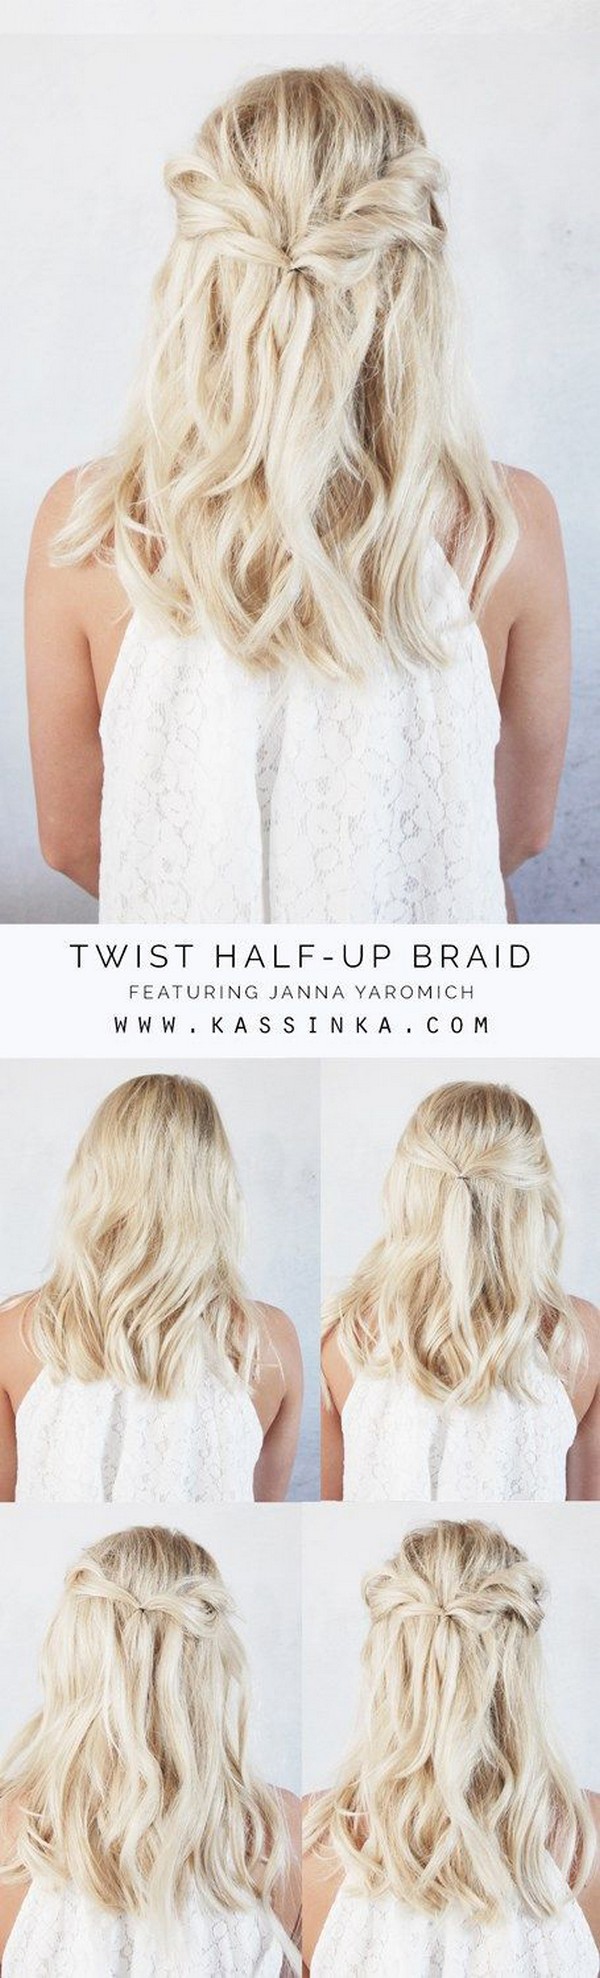 twist half up half down wedding hairstyles for medium length hair